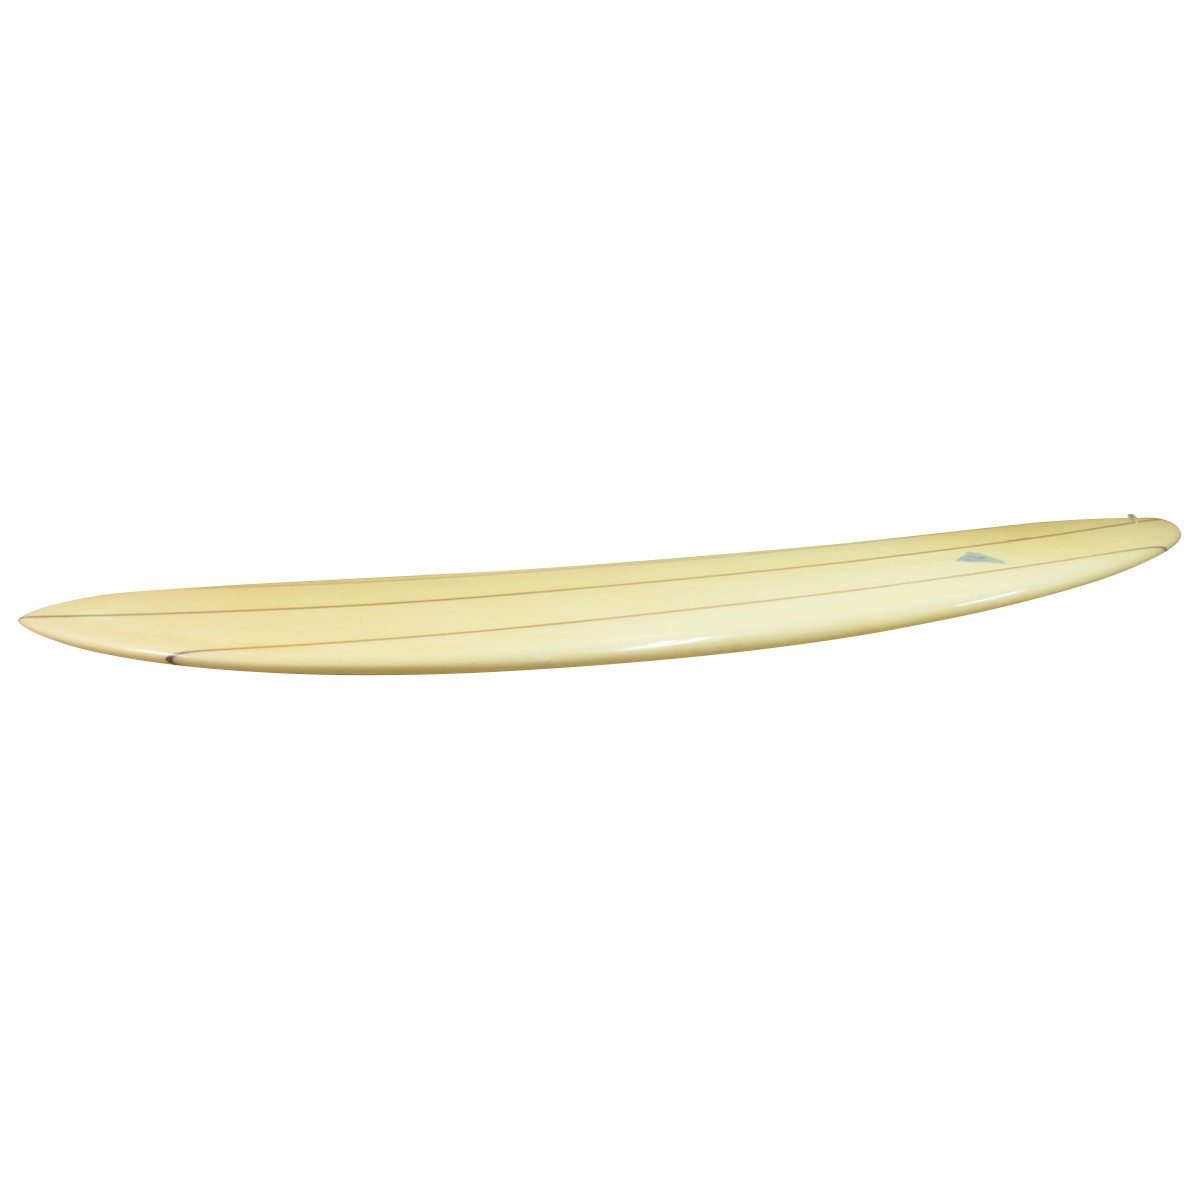 SURFBOARDS BY JOEL TUDOR / PAPA JOE 9`11 Shaped by BILL SHROSBREE